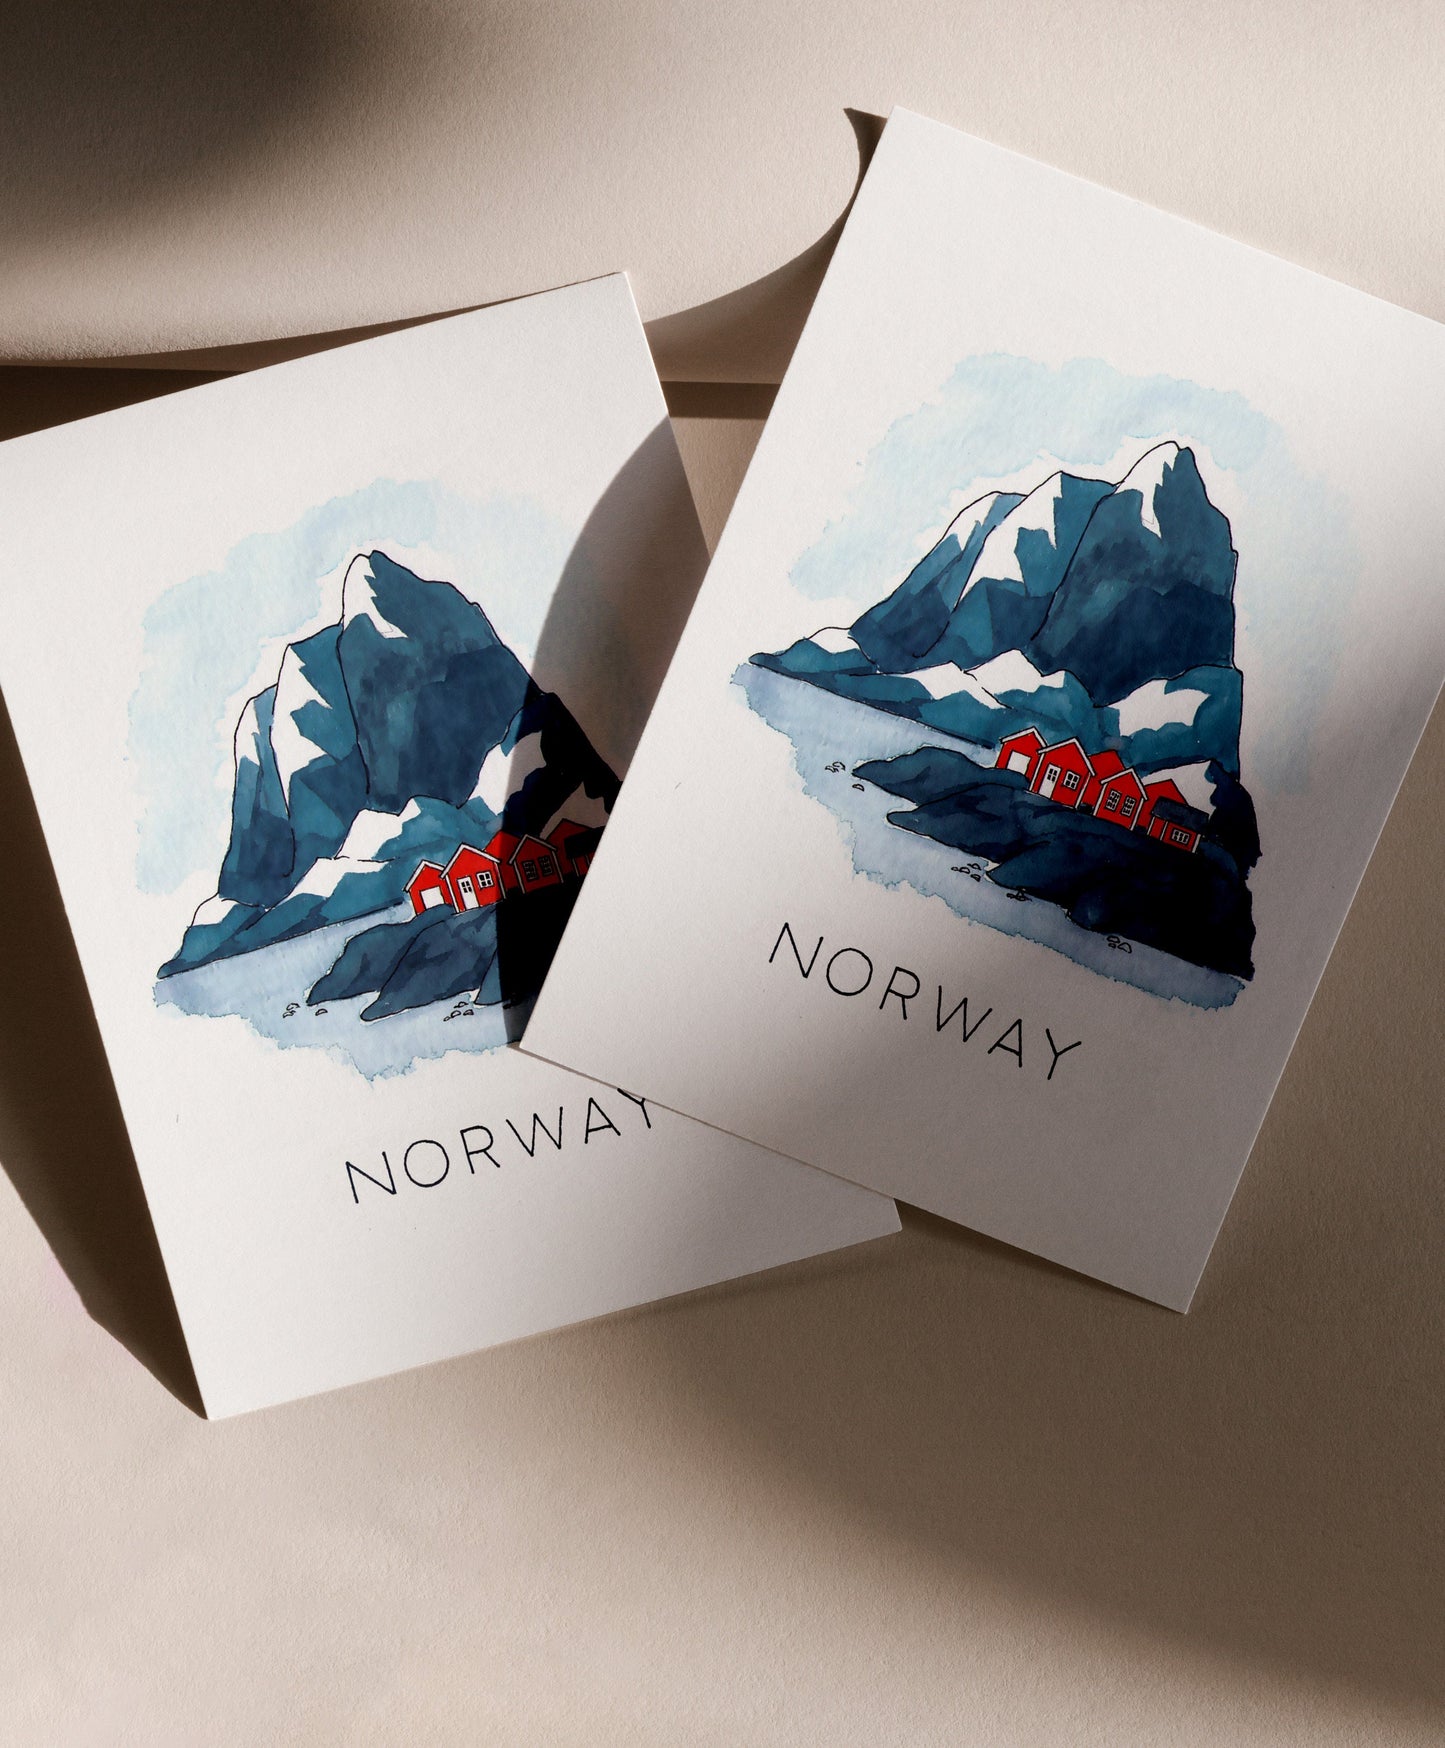 Beautiful Norway Landscape Art Print | Nordic Illustration | Scandinavian Art Print | Nature Wall Decor | Nursery Decor | Travel Wall Art